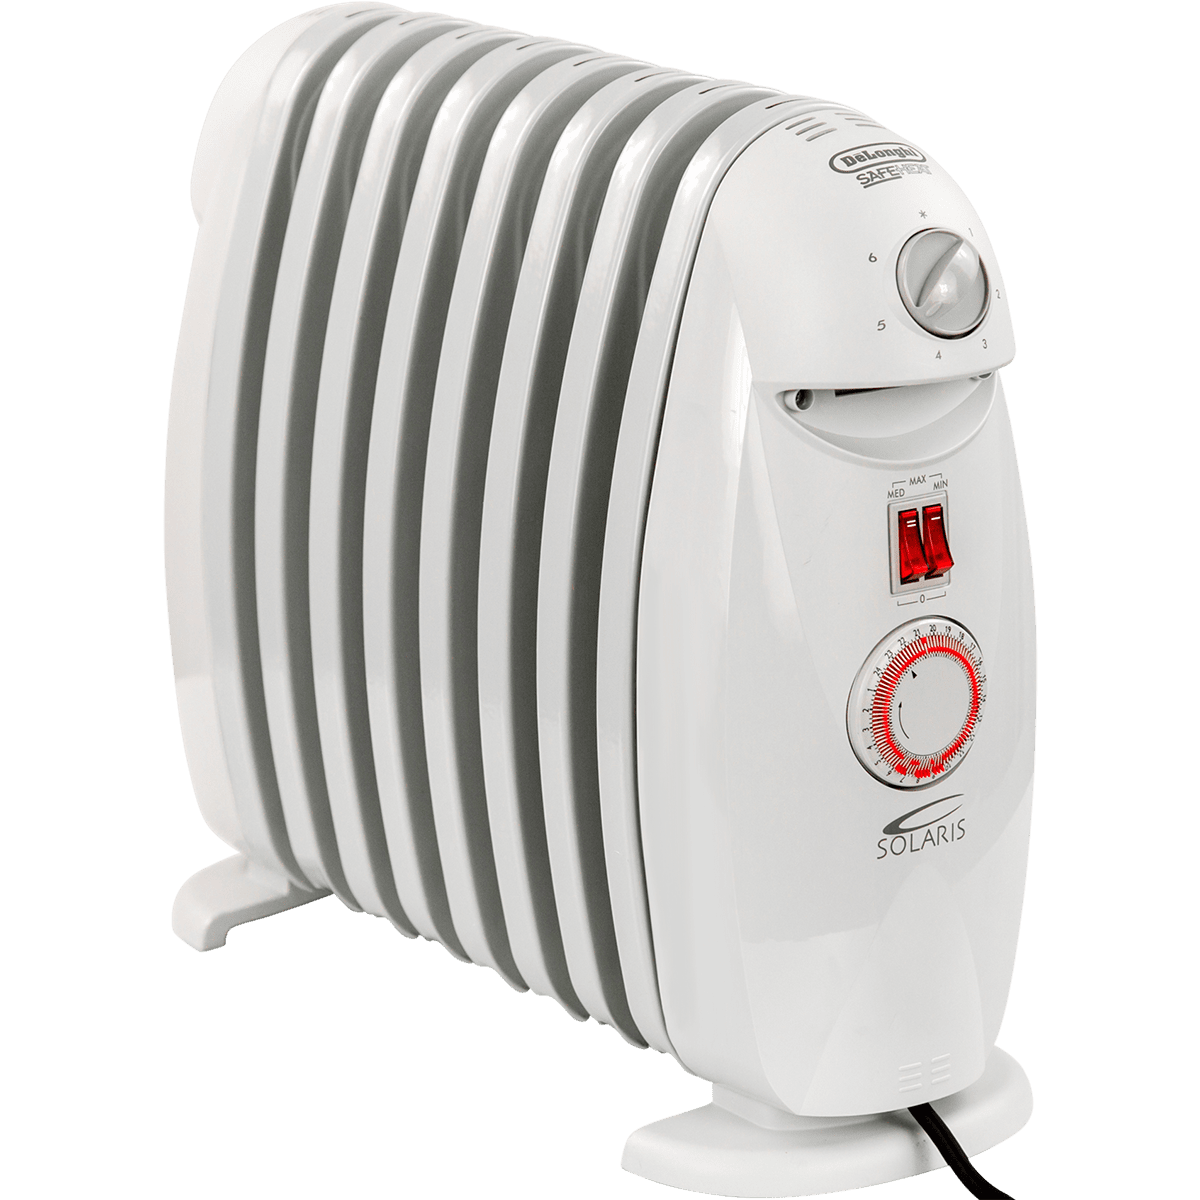 DeLonghi 1200W Bathroom Radiator Heater - Primary View